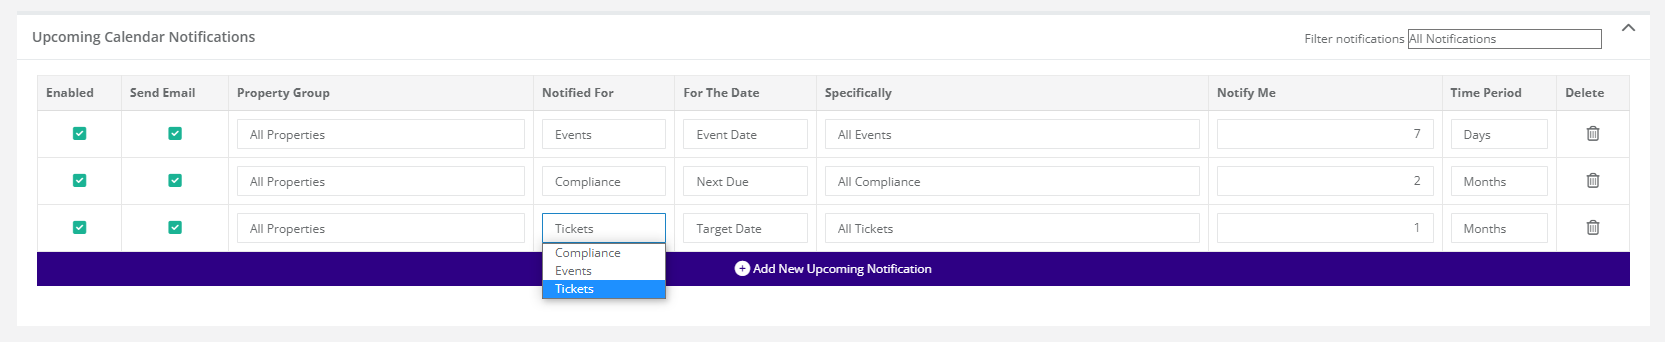 Upcoming Calendar Notifications setup showing Tickets